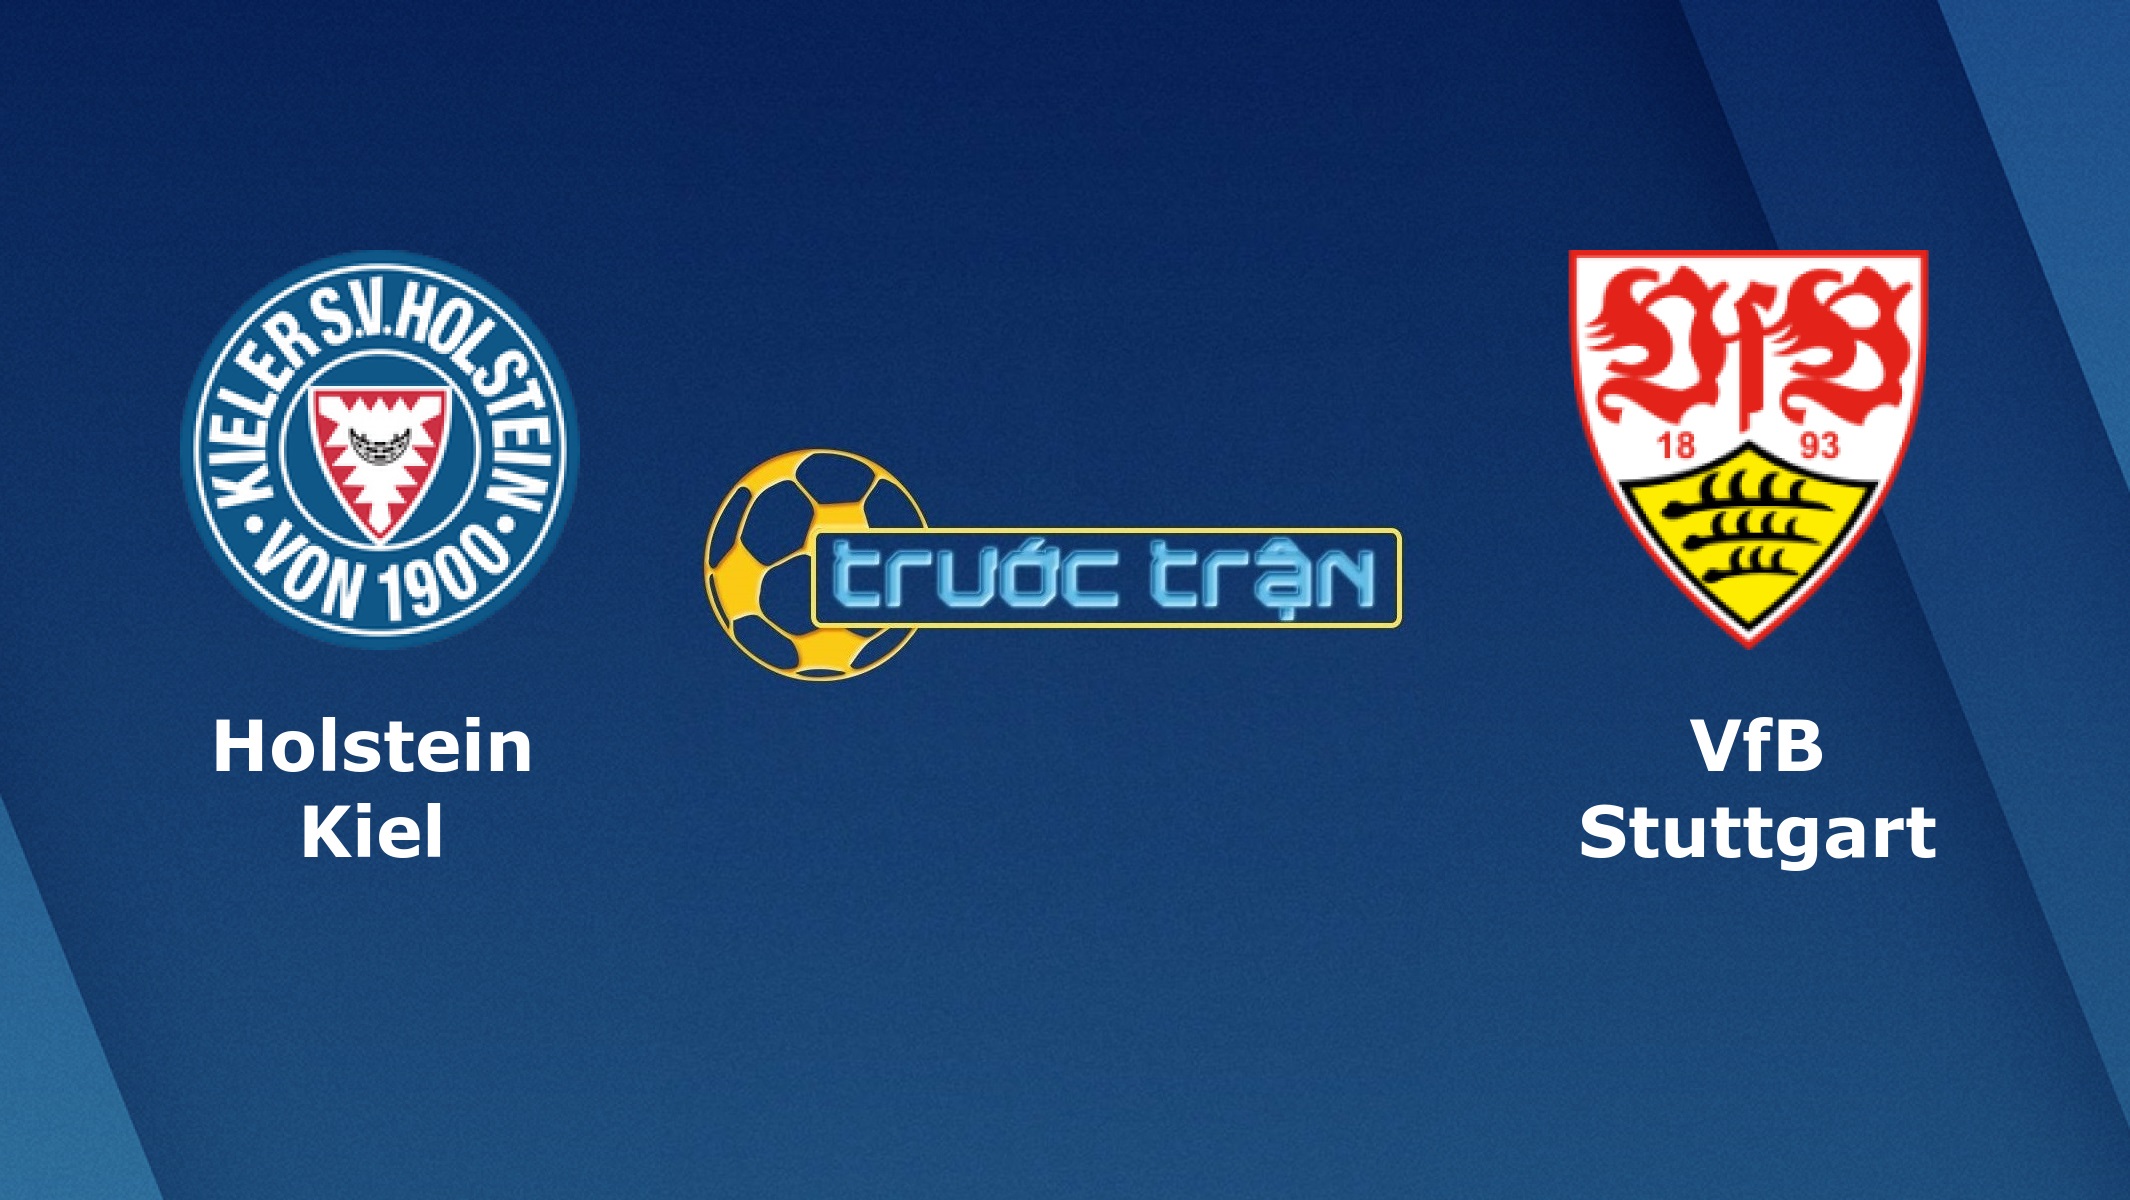 Holstein Kiel vs VfB Stuttgart – Tip kèo bóng đá hôm nay – 24/05